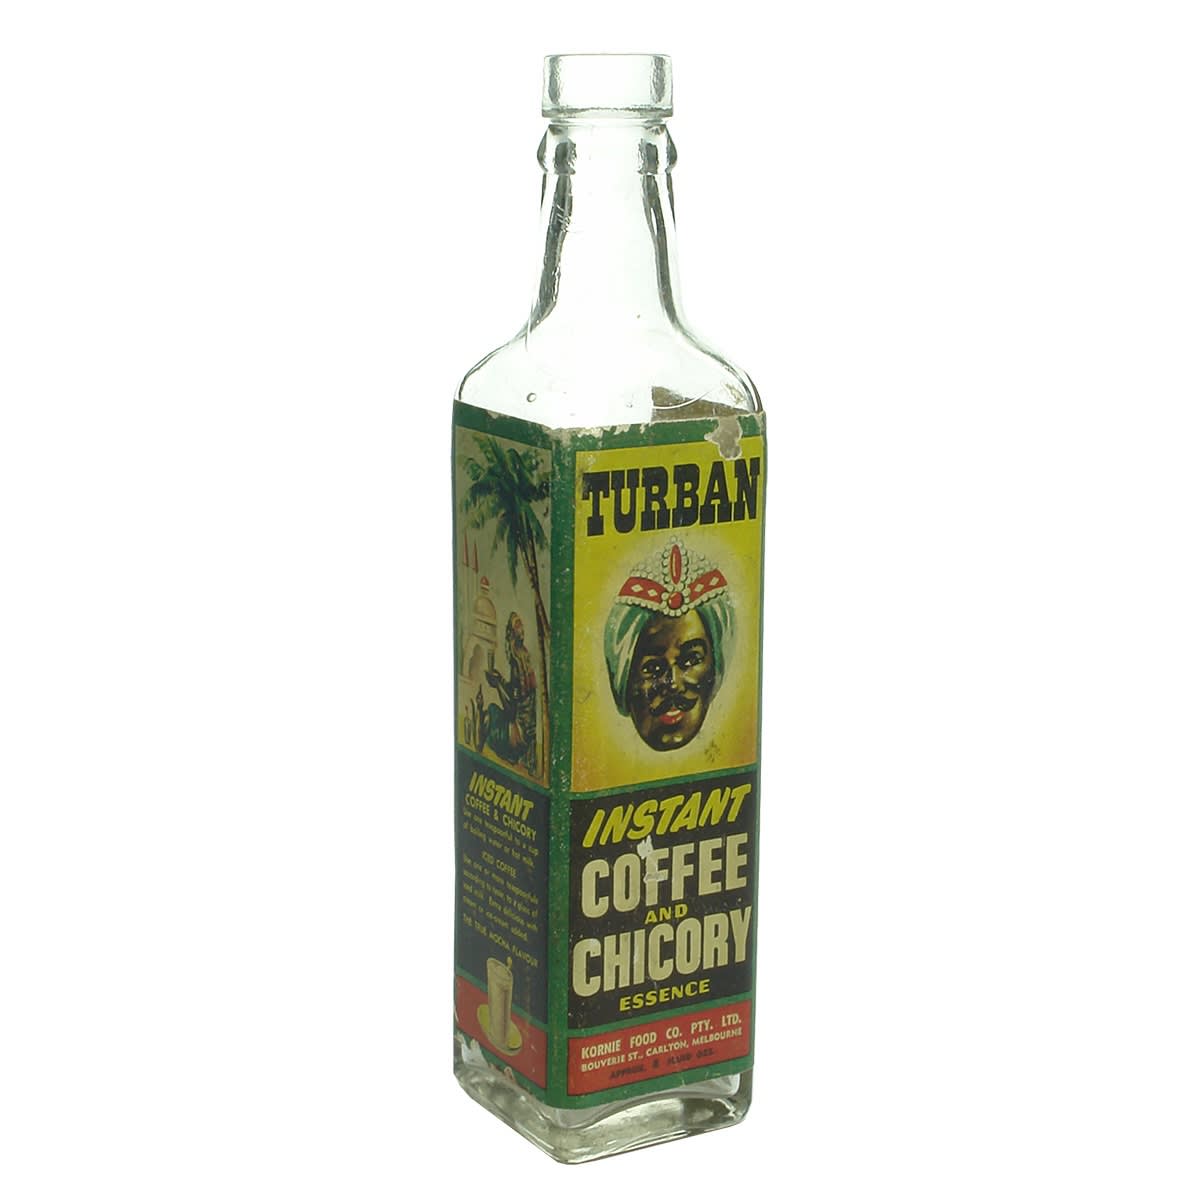 Coffee Essence. Kornie Food Co Pty Ltd. Turban. Original Label. (Victoria)